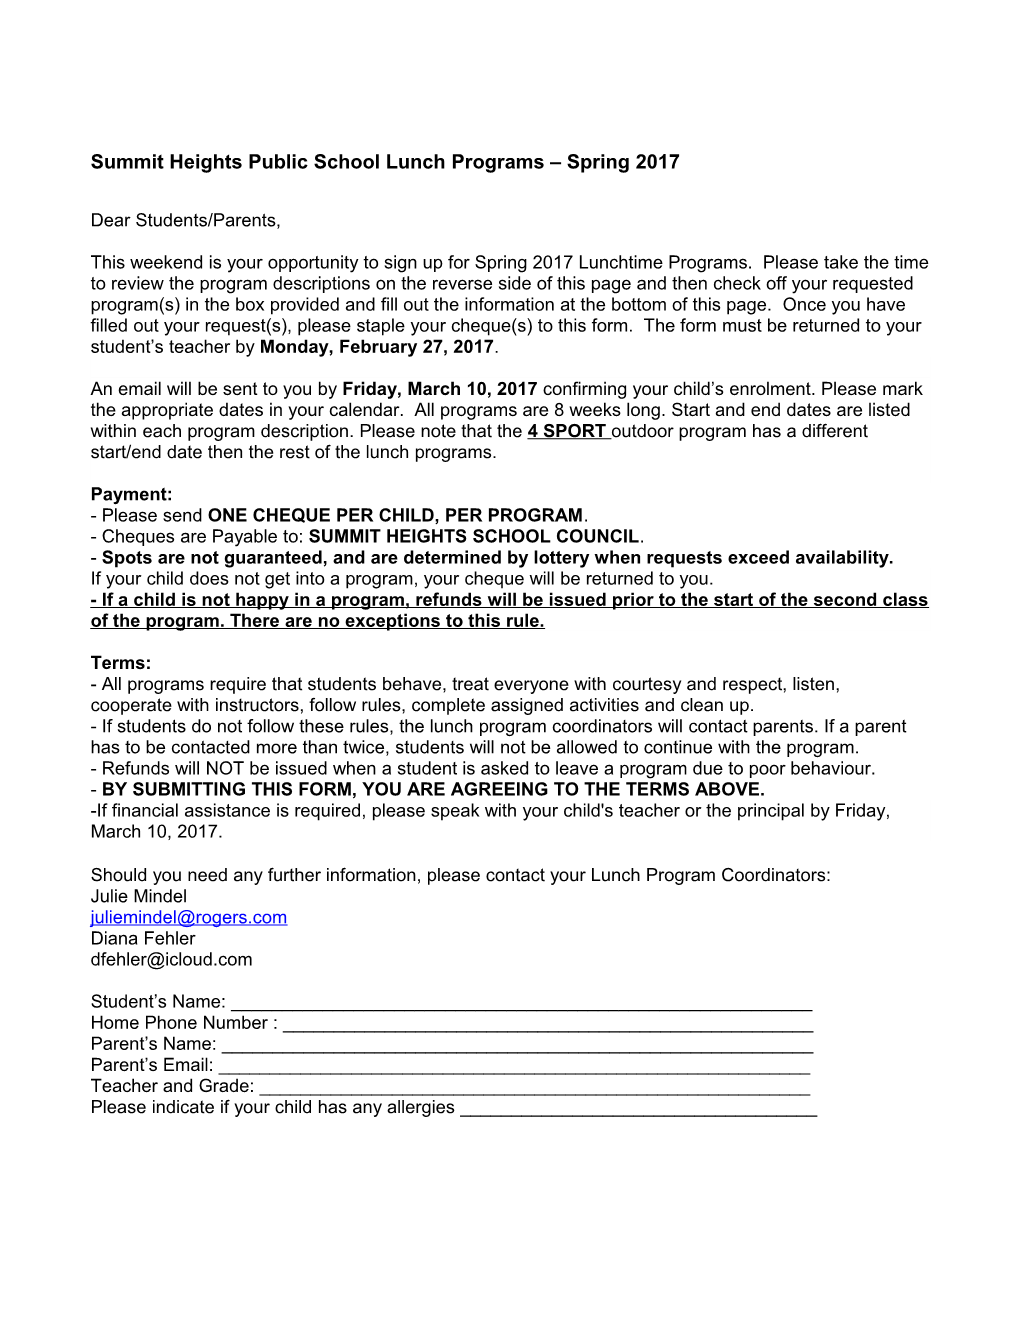 Summit Heights Public School Lunch Programs Spring 2017